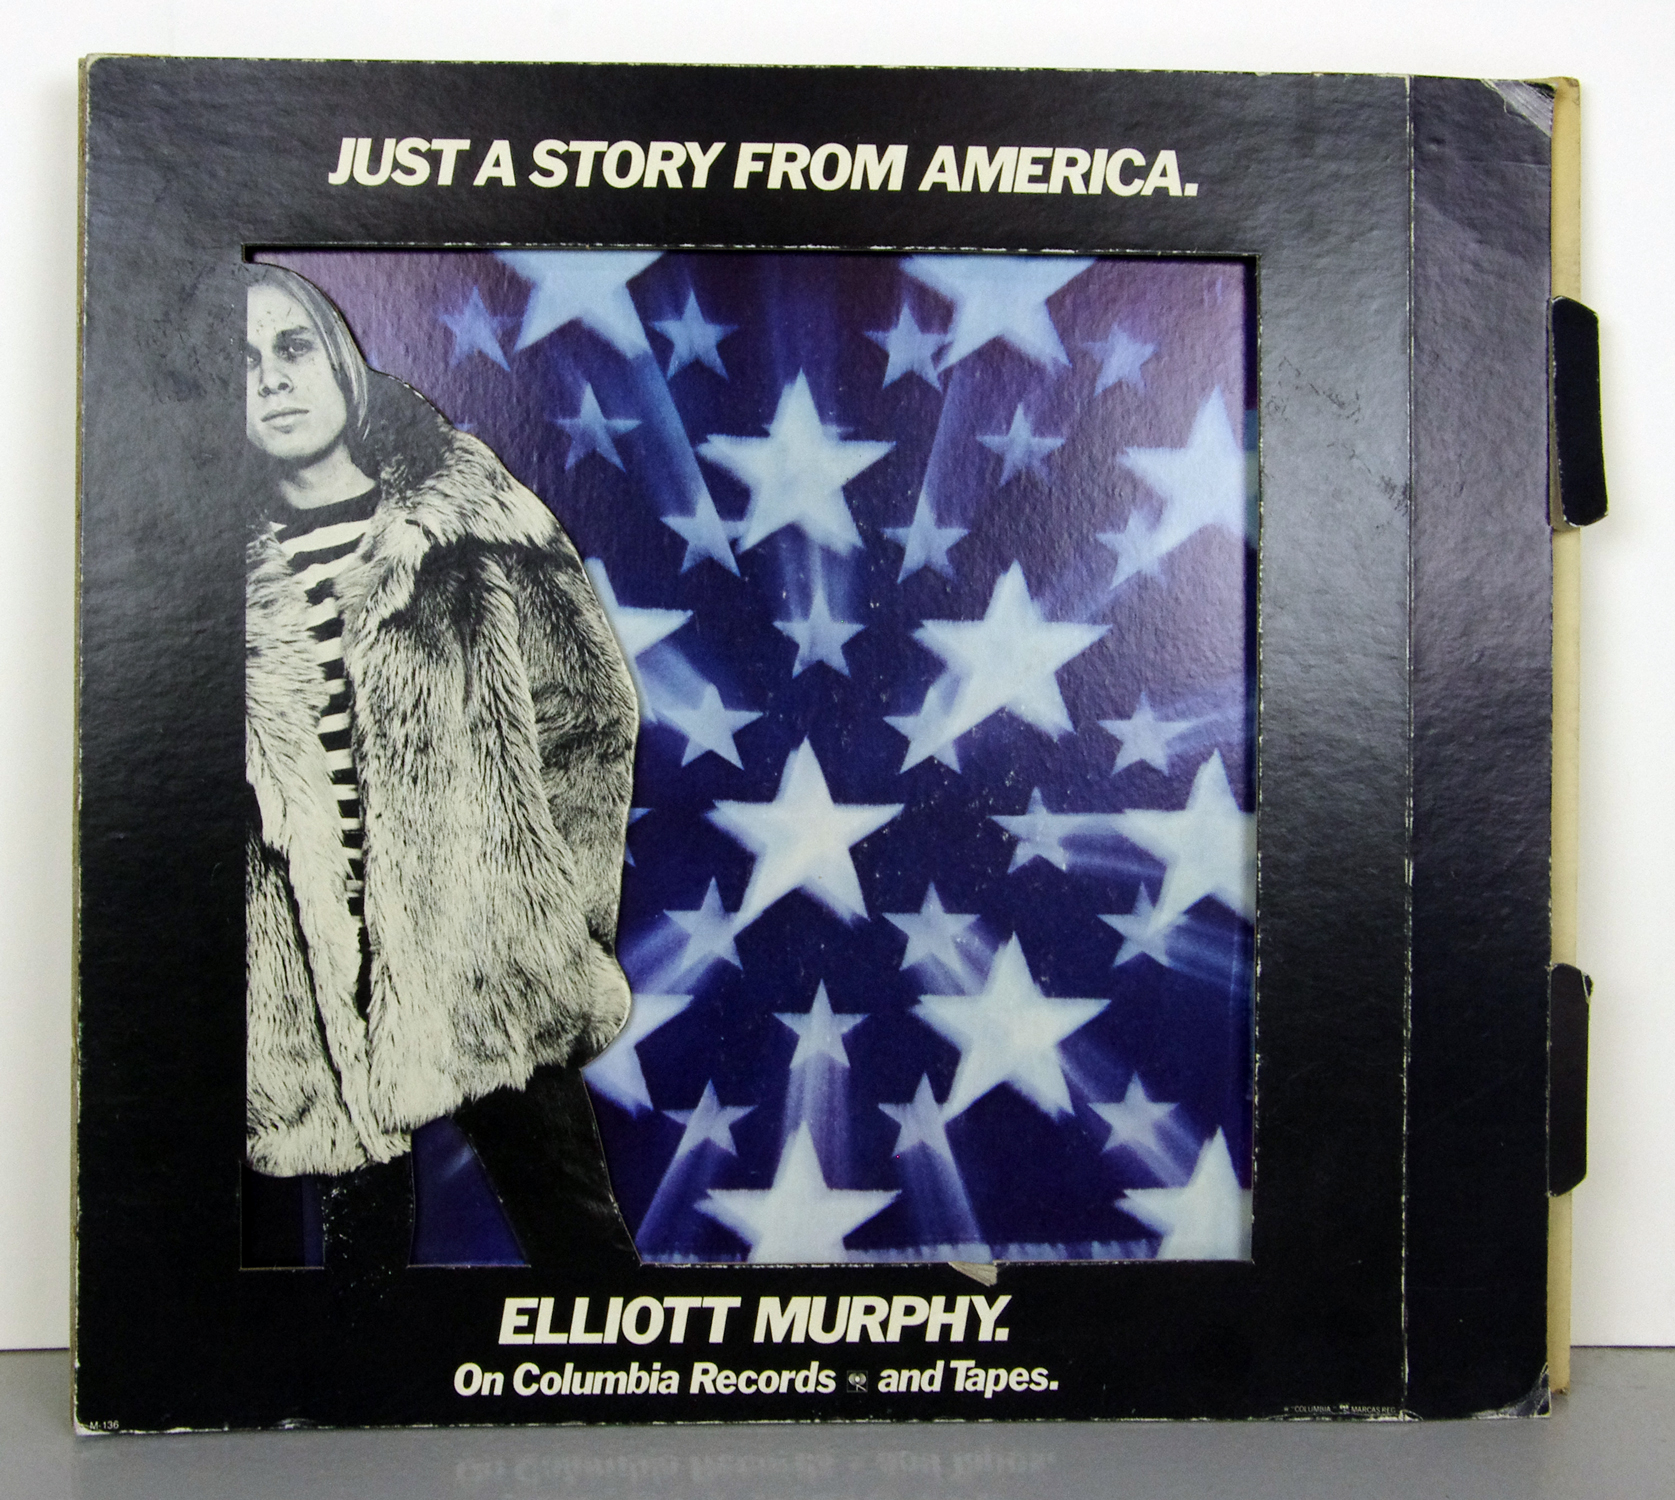 Elliott Murphy Cardboard Black Light Display Just a Story from America 1977